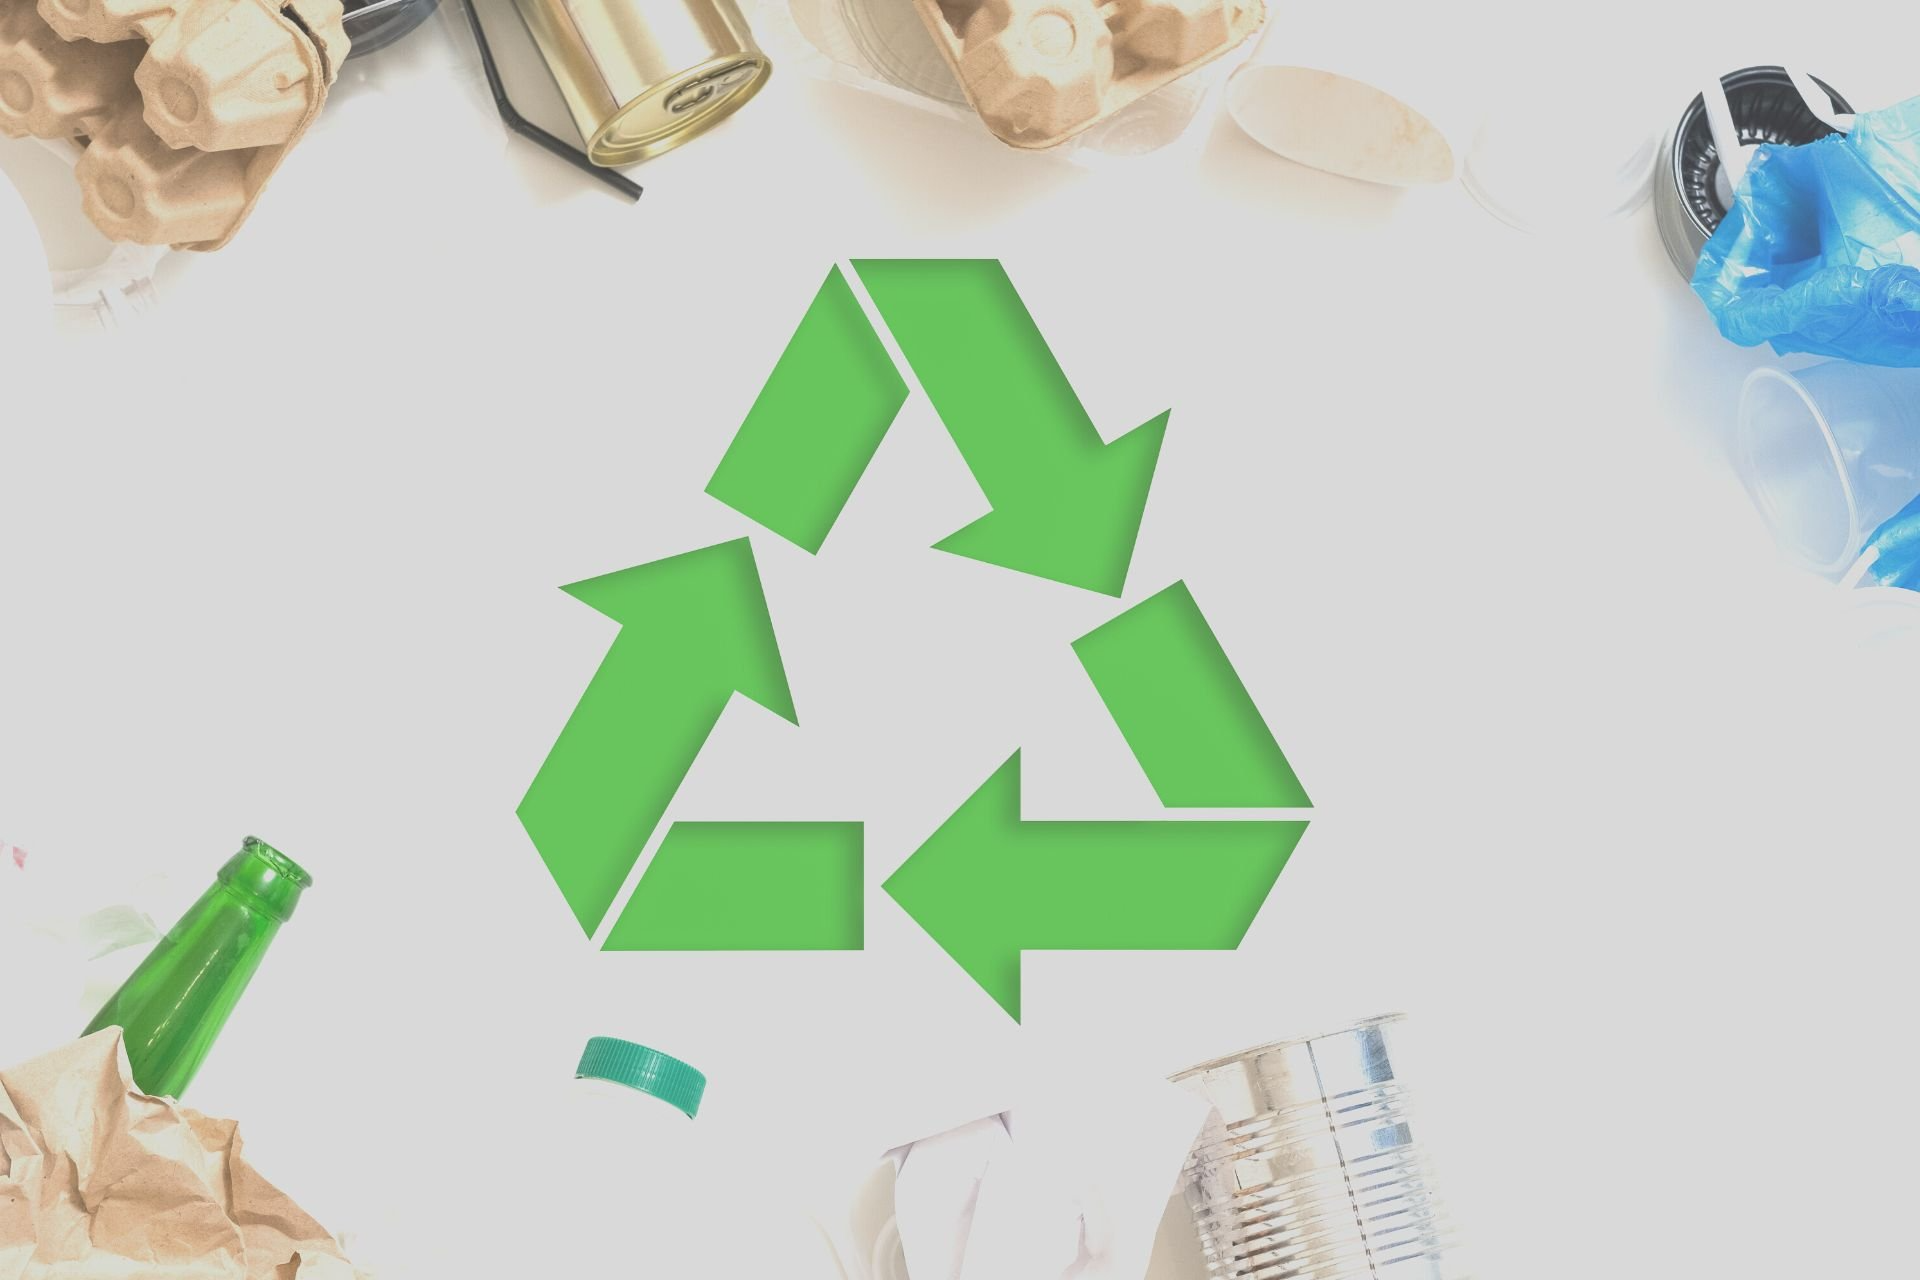 Robert Procházka: Recycling is paramount